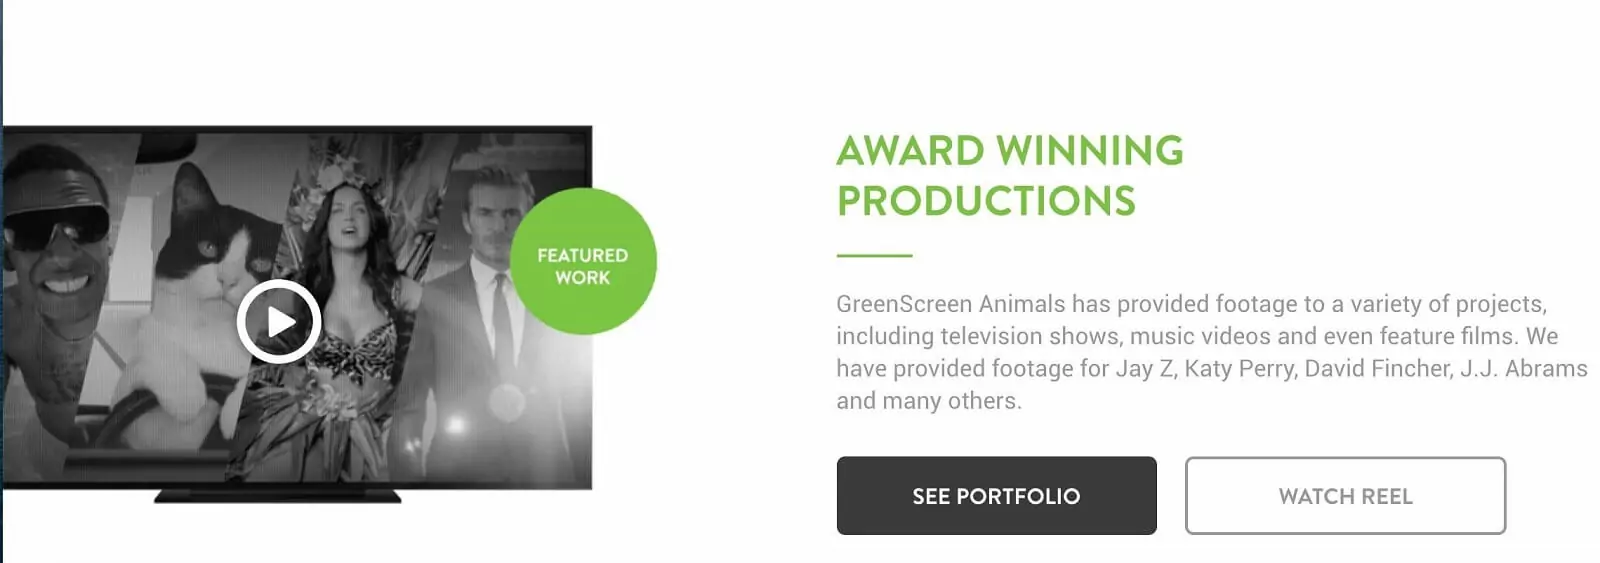 Best Green Screen Background Video - Portfolio - Green Screen Animals